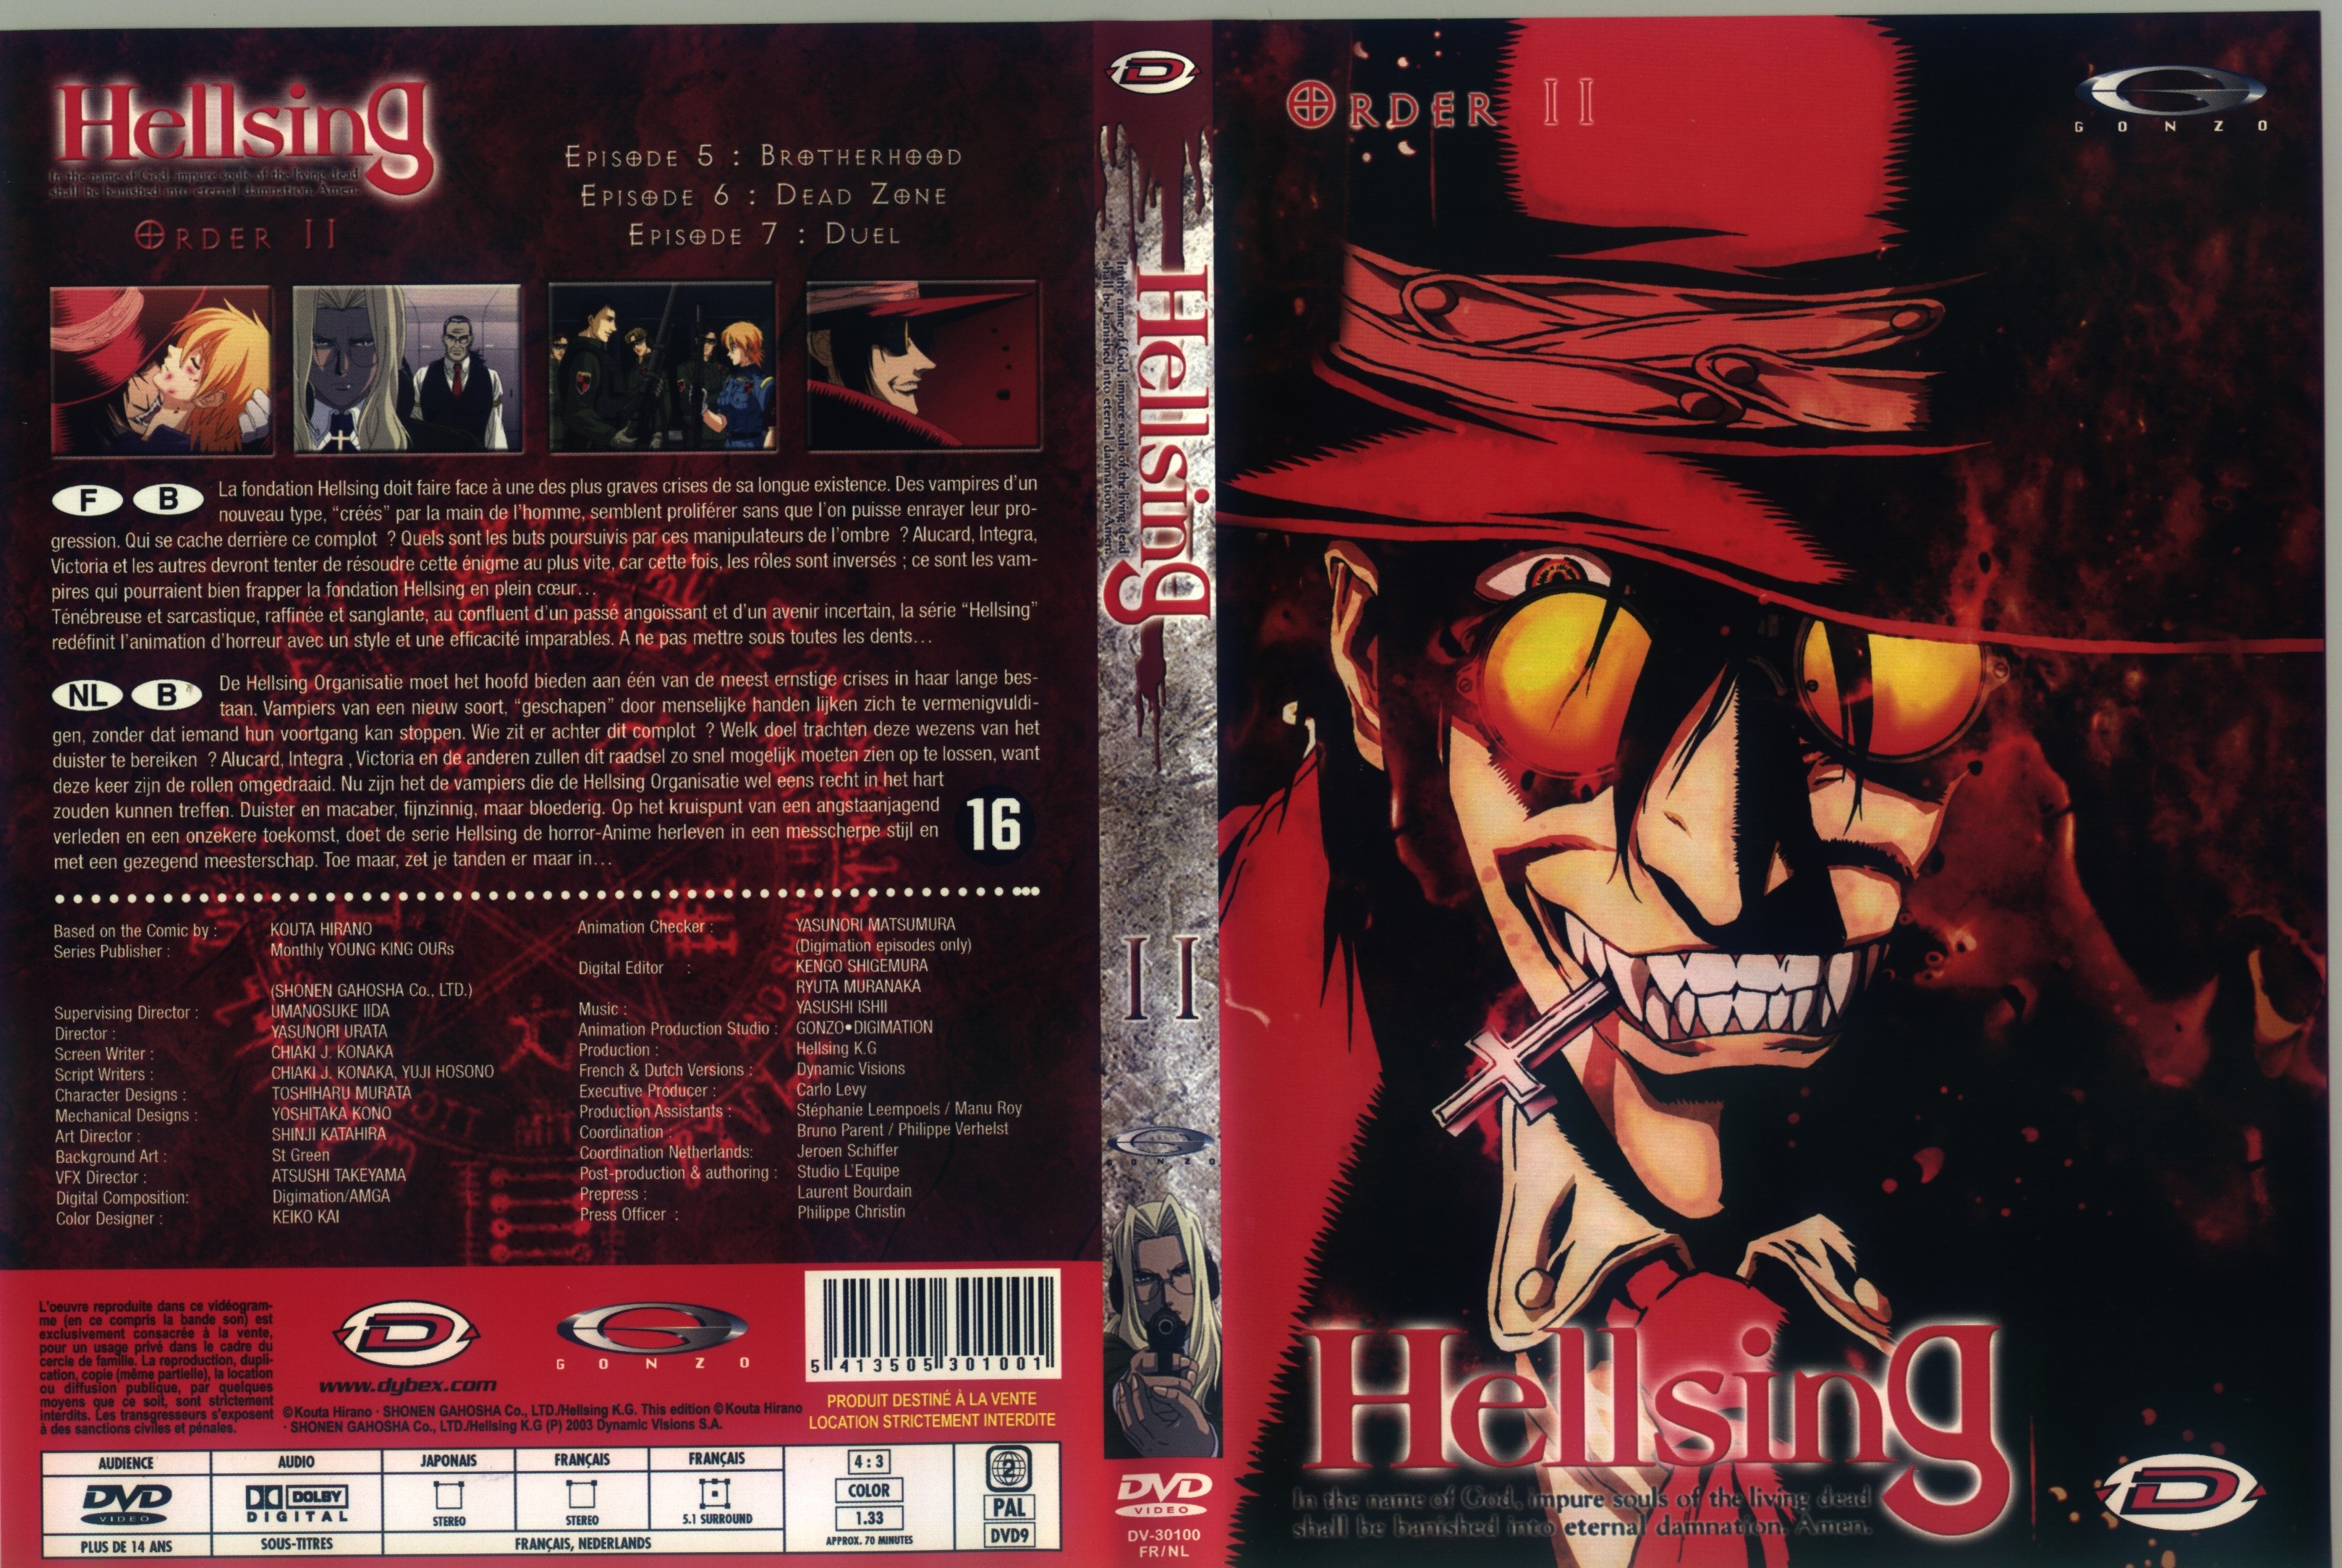 Jaquette DVD Hellsing vol 2